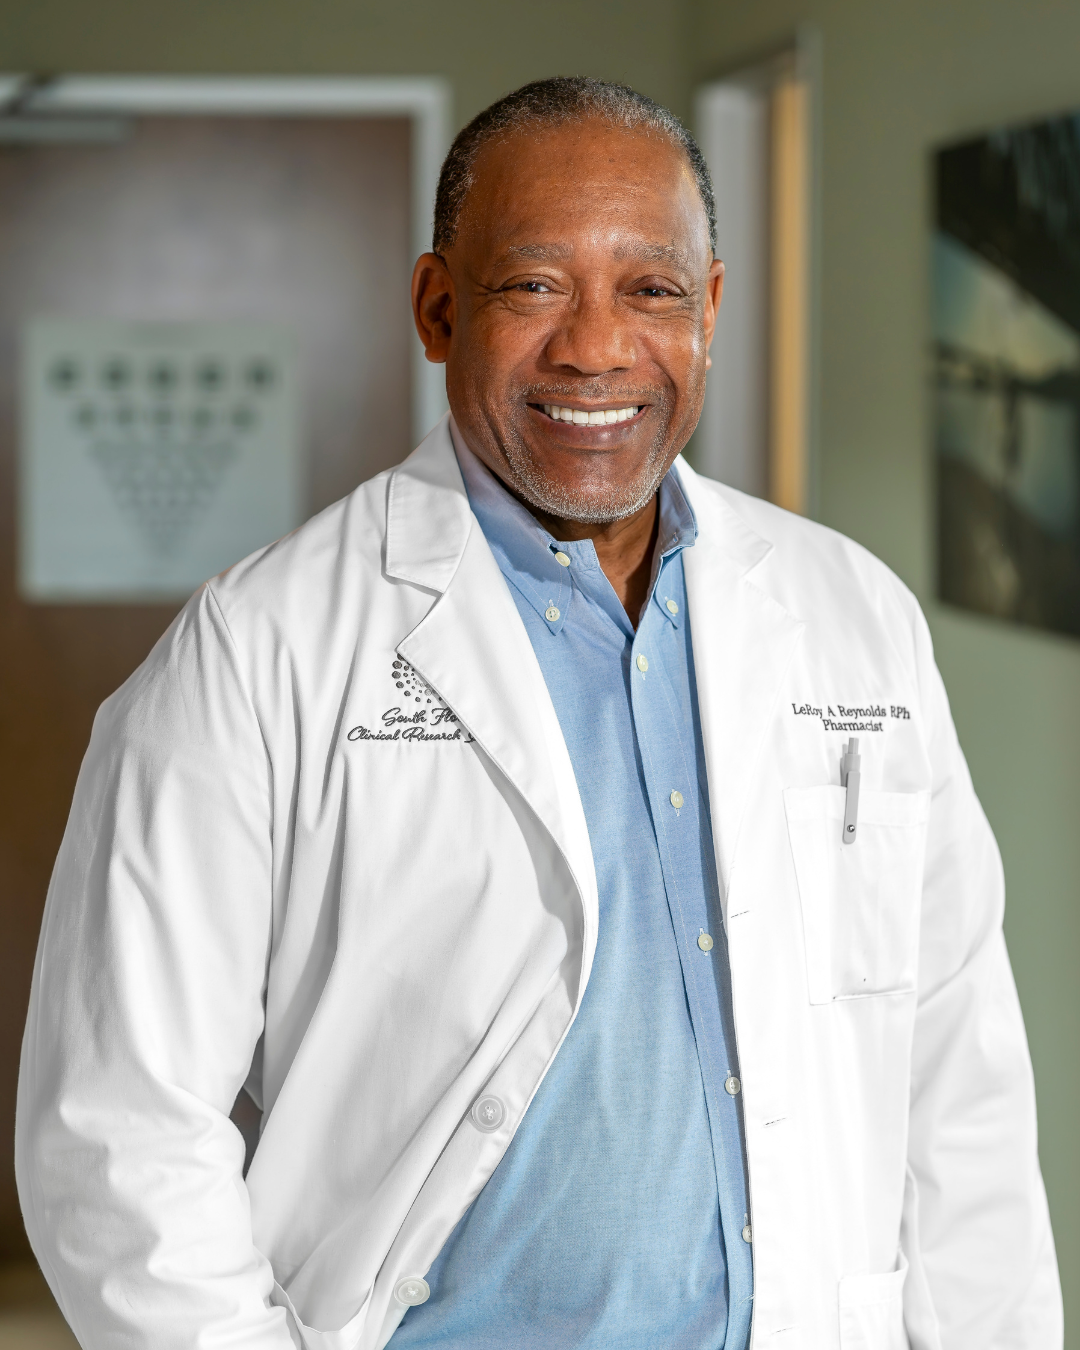 Black male doctor wearing white coat